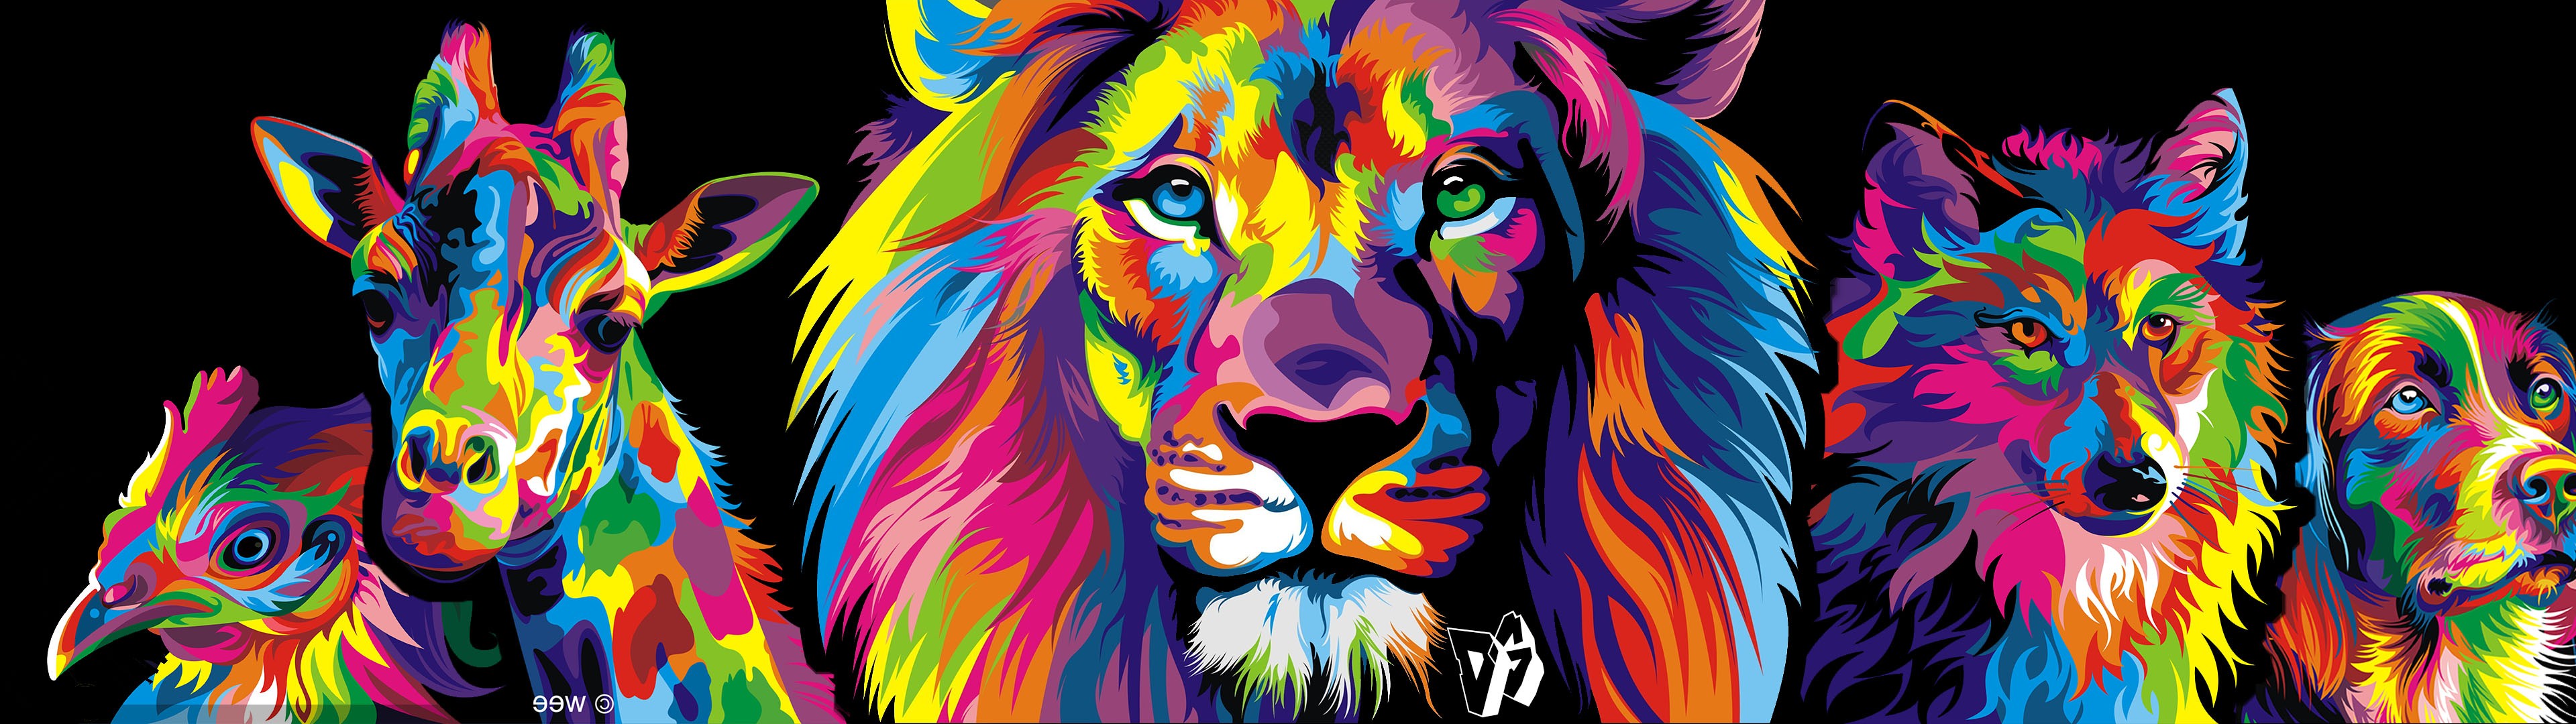 40+ Colorful Lion Wallpaper on WallpaperSafari